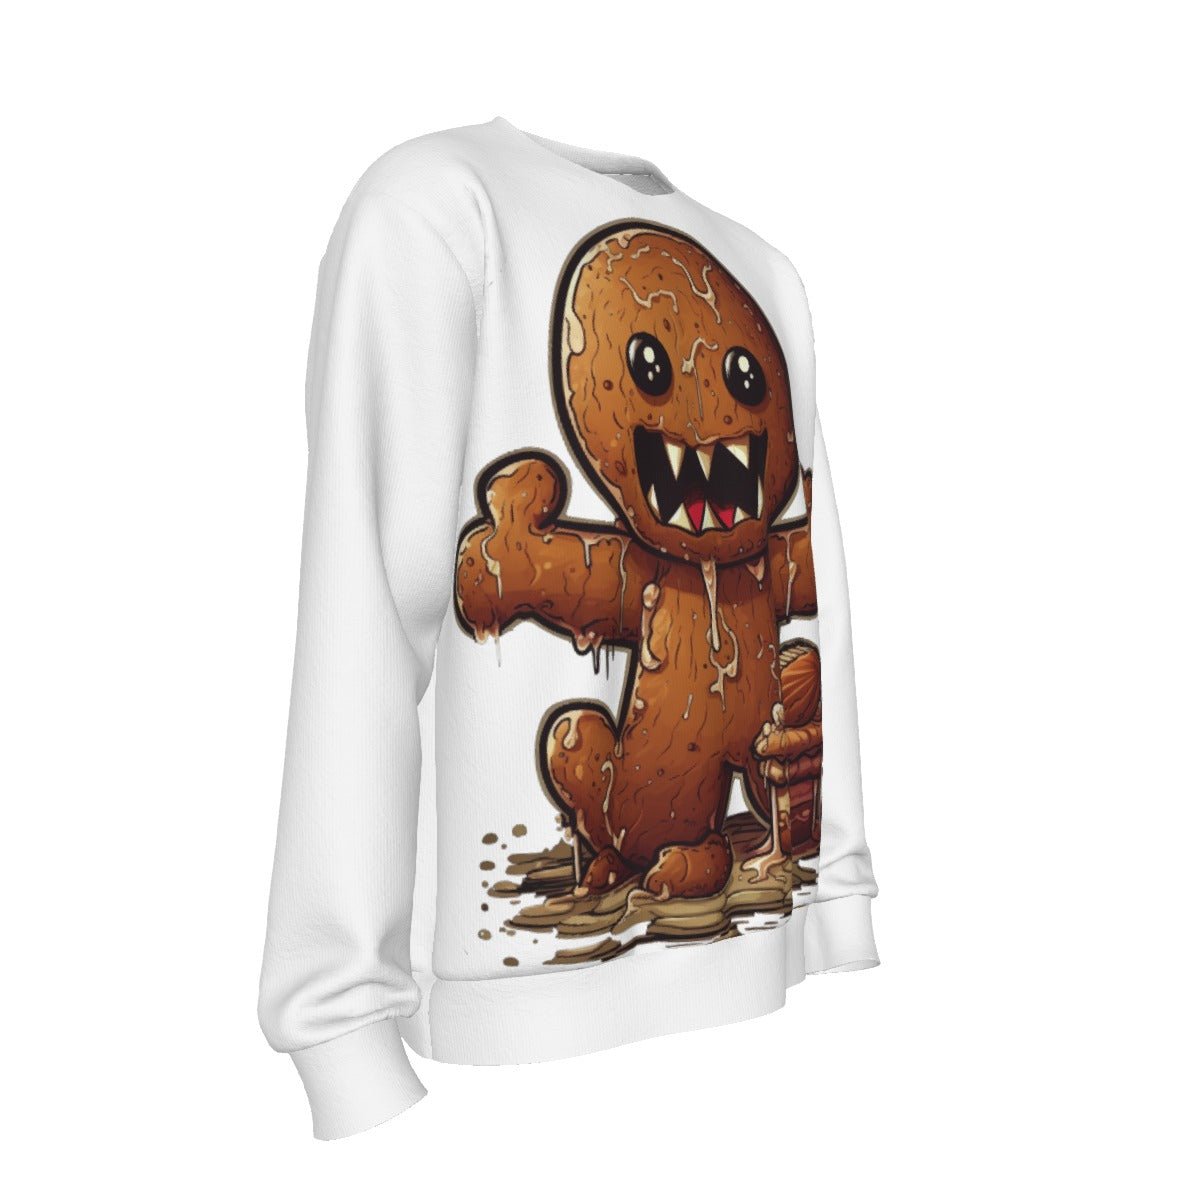 Men's Christmas Sweater - Evil Gingerbread Man - Festive Style